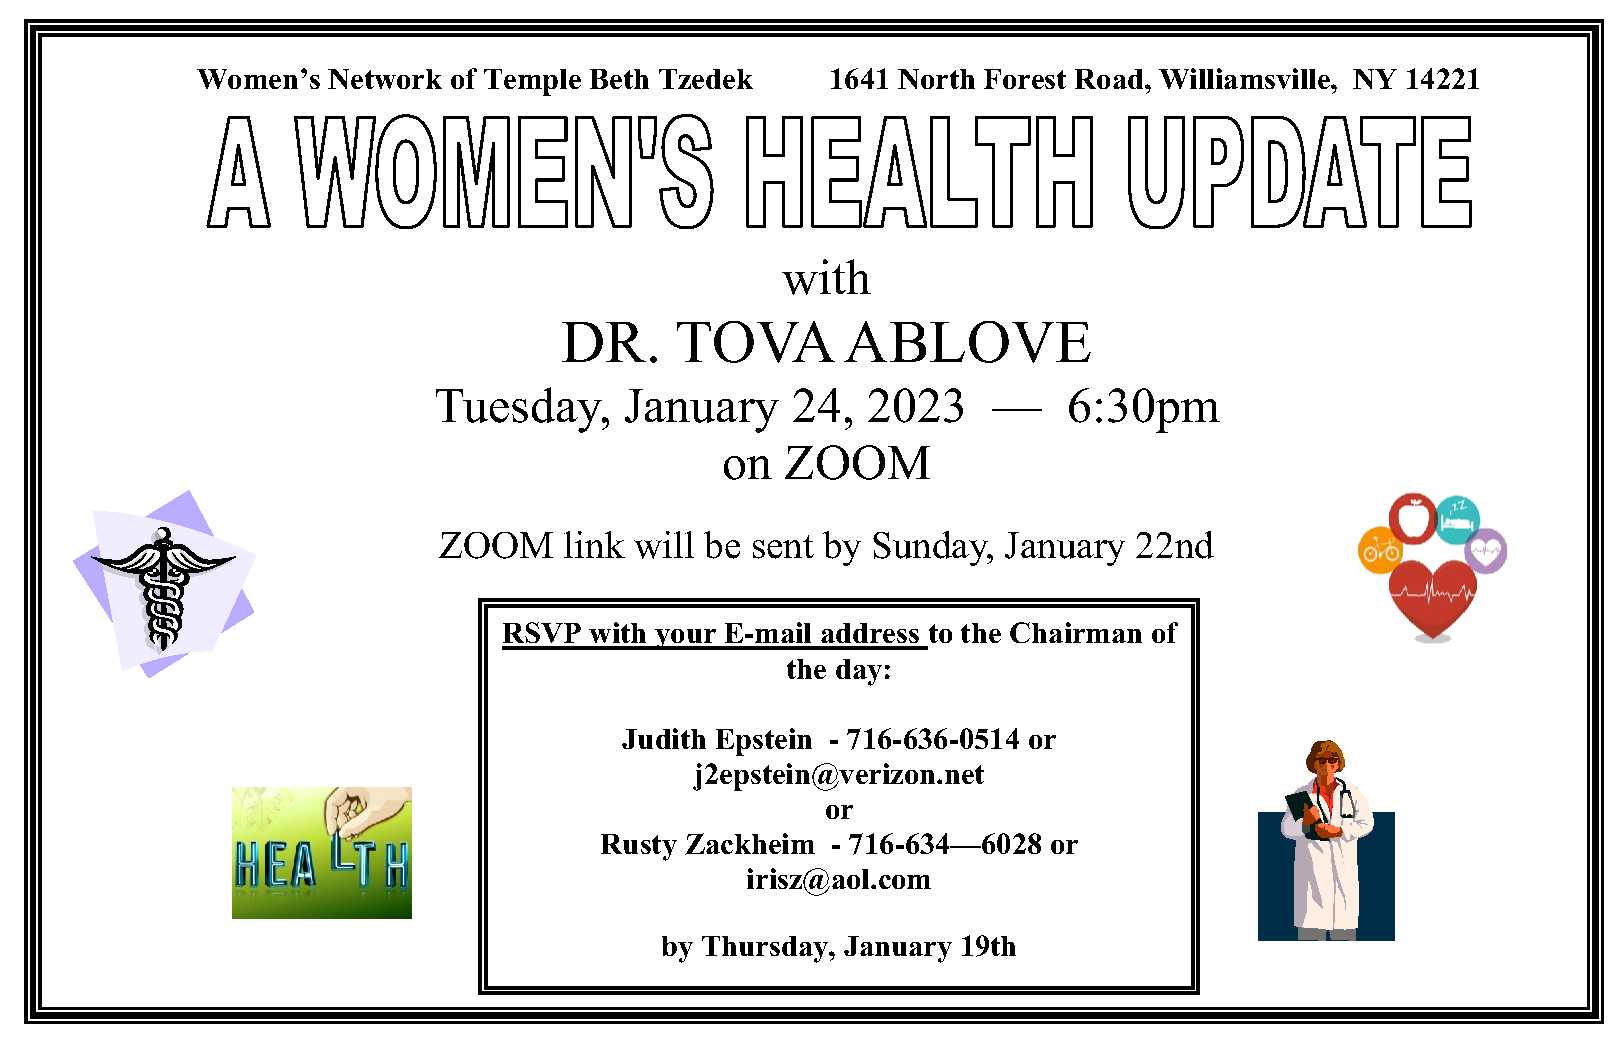 TBT - A Women's Health Update - 2023 January 24th WN Program